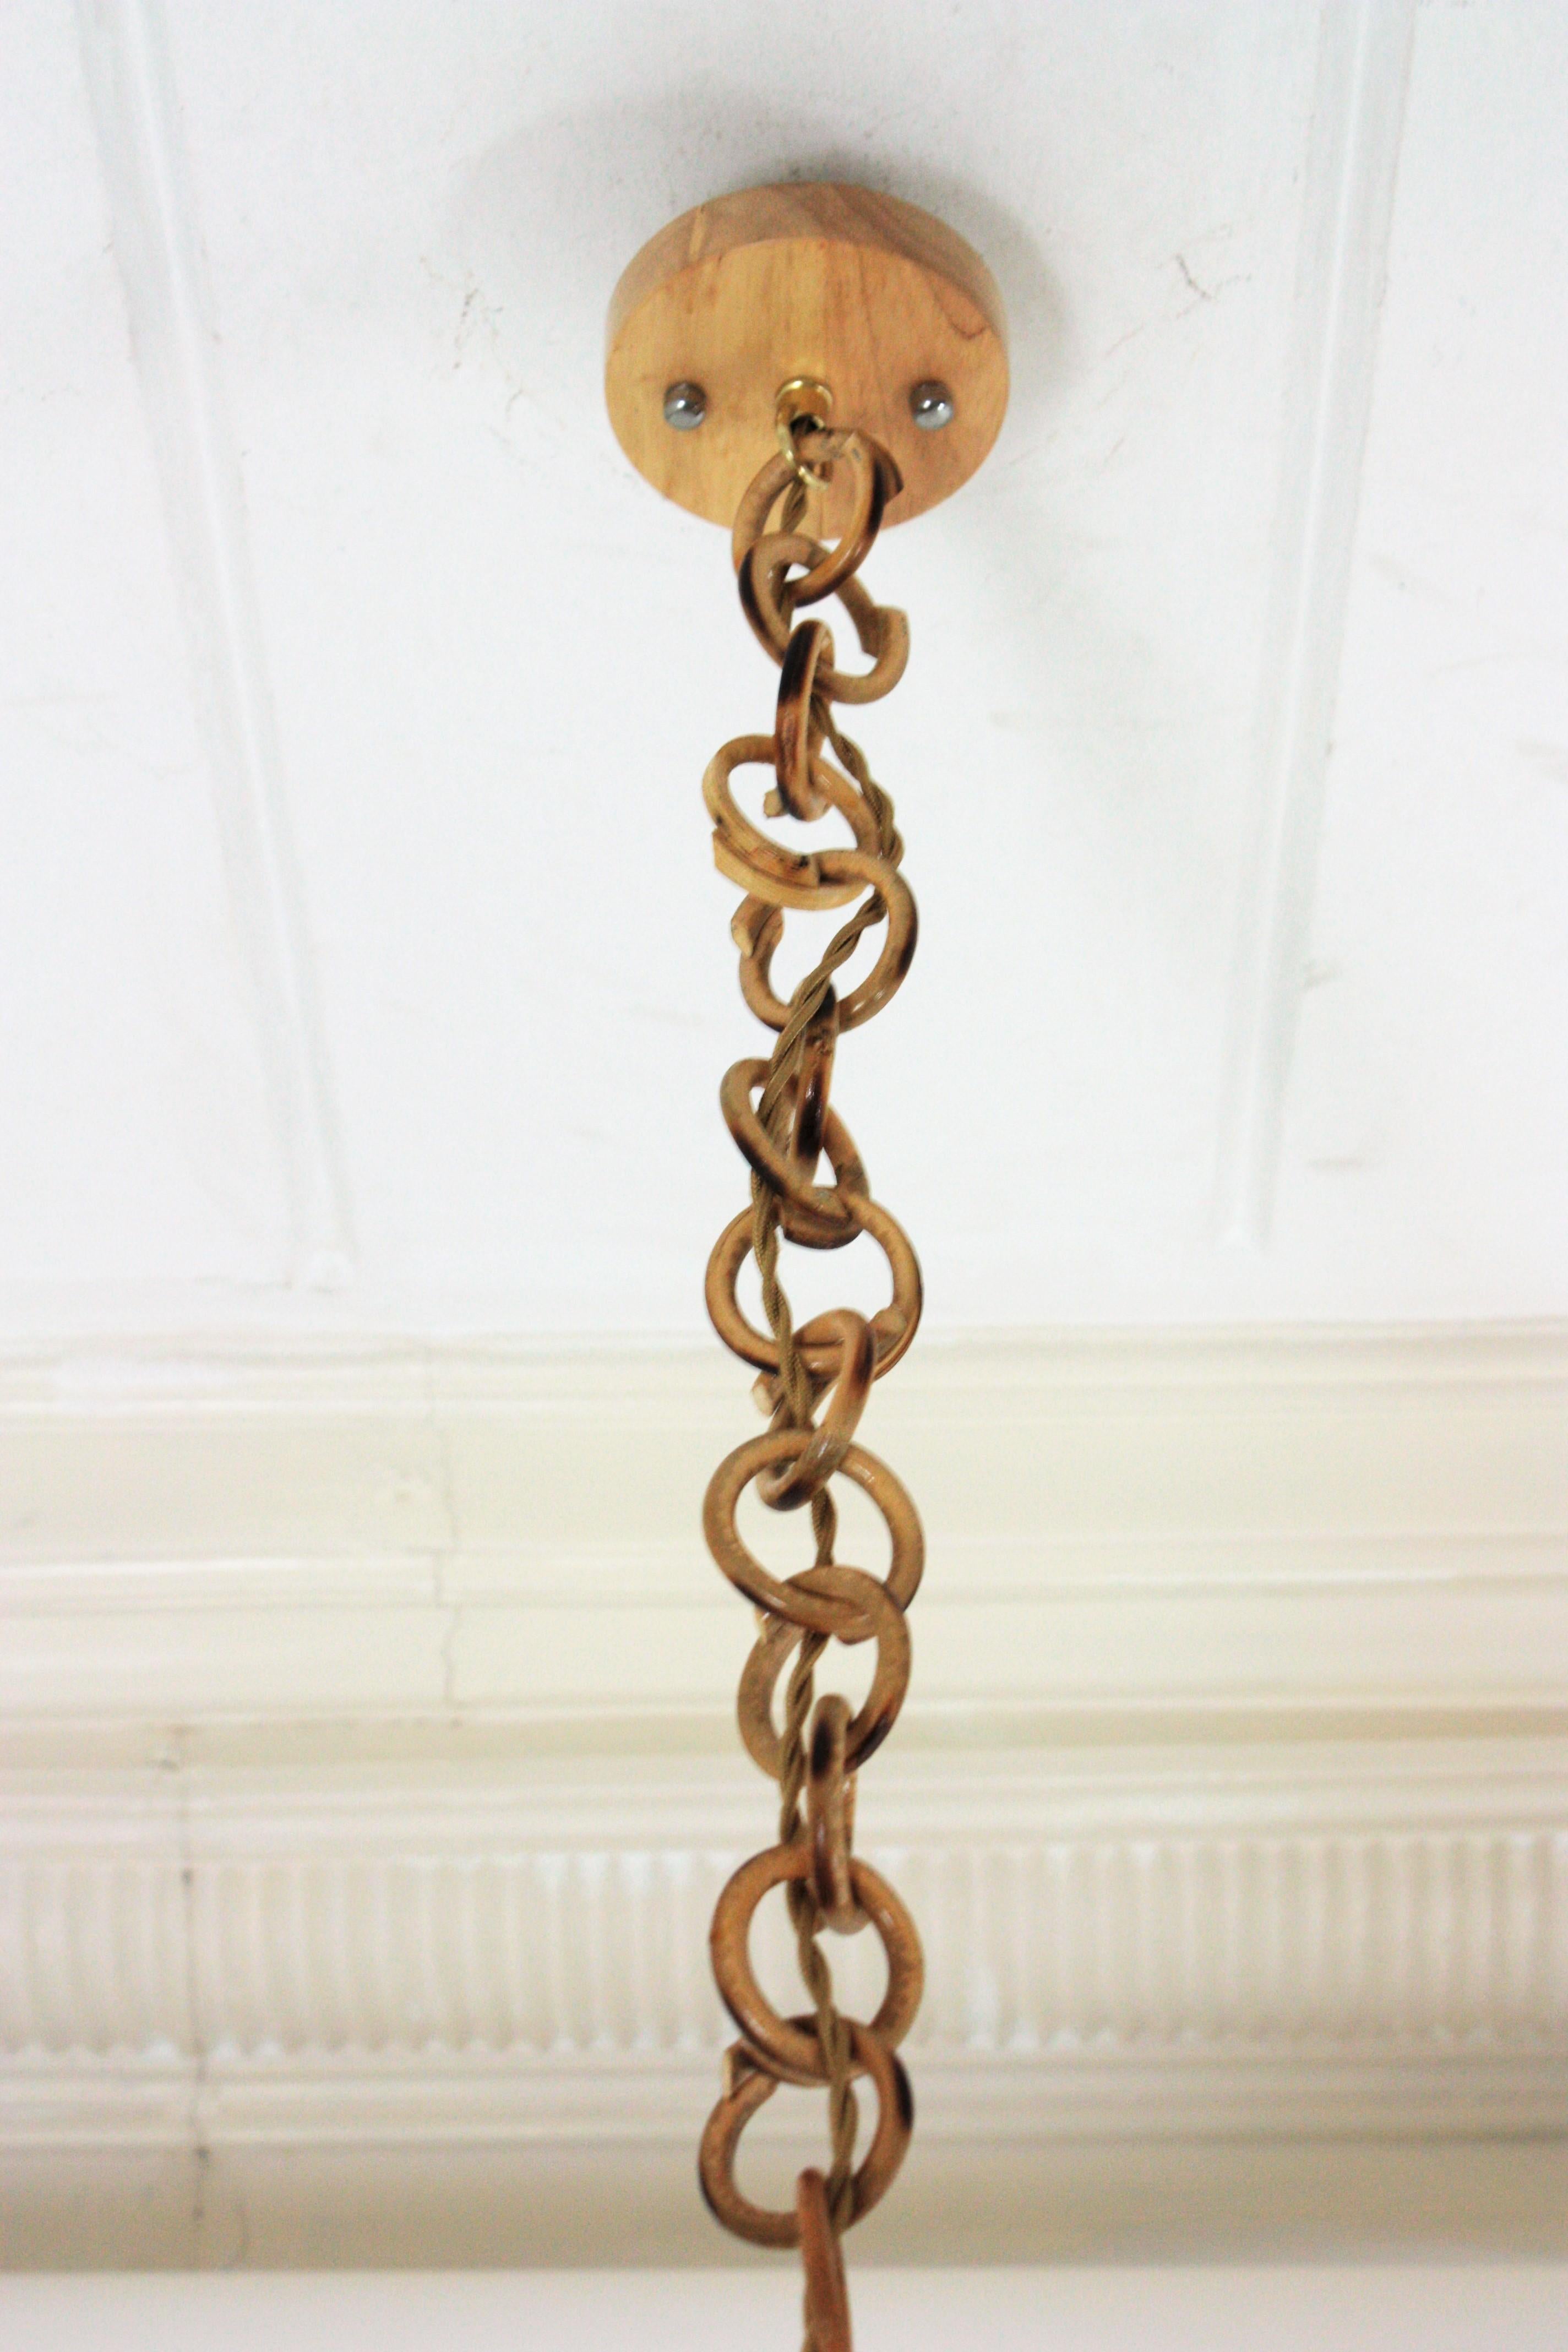 Italian Modernist Wicker Wire Rattan Globe Pendant Hanging Light For Sale 5